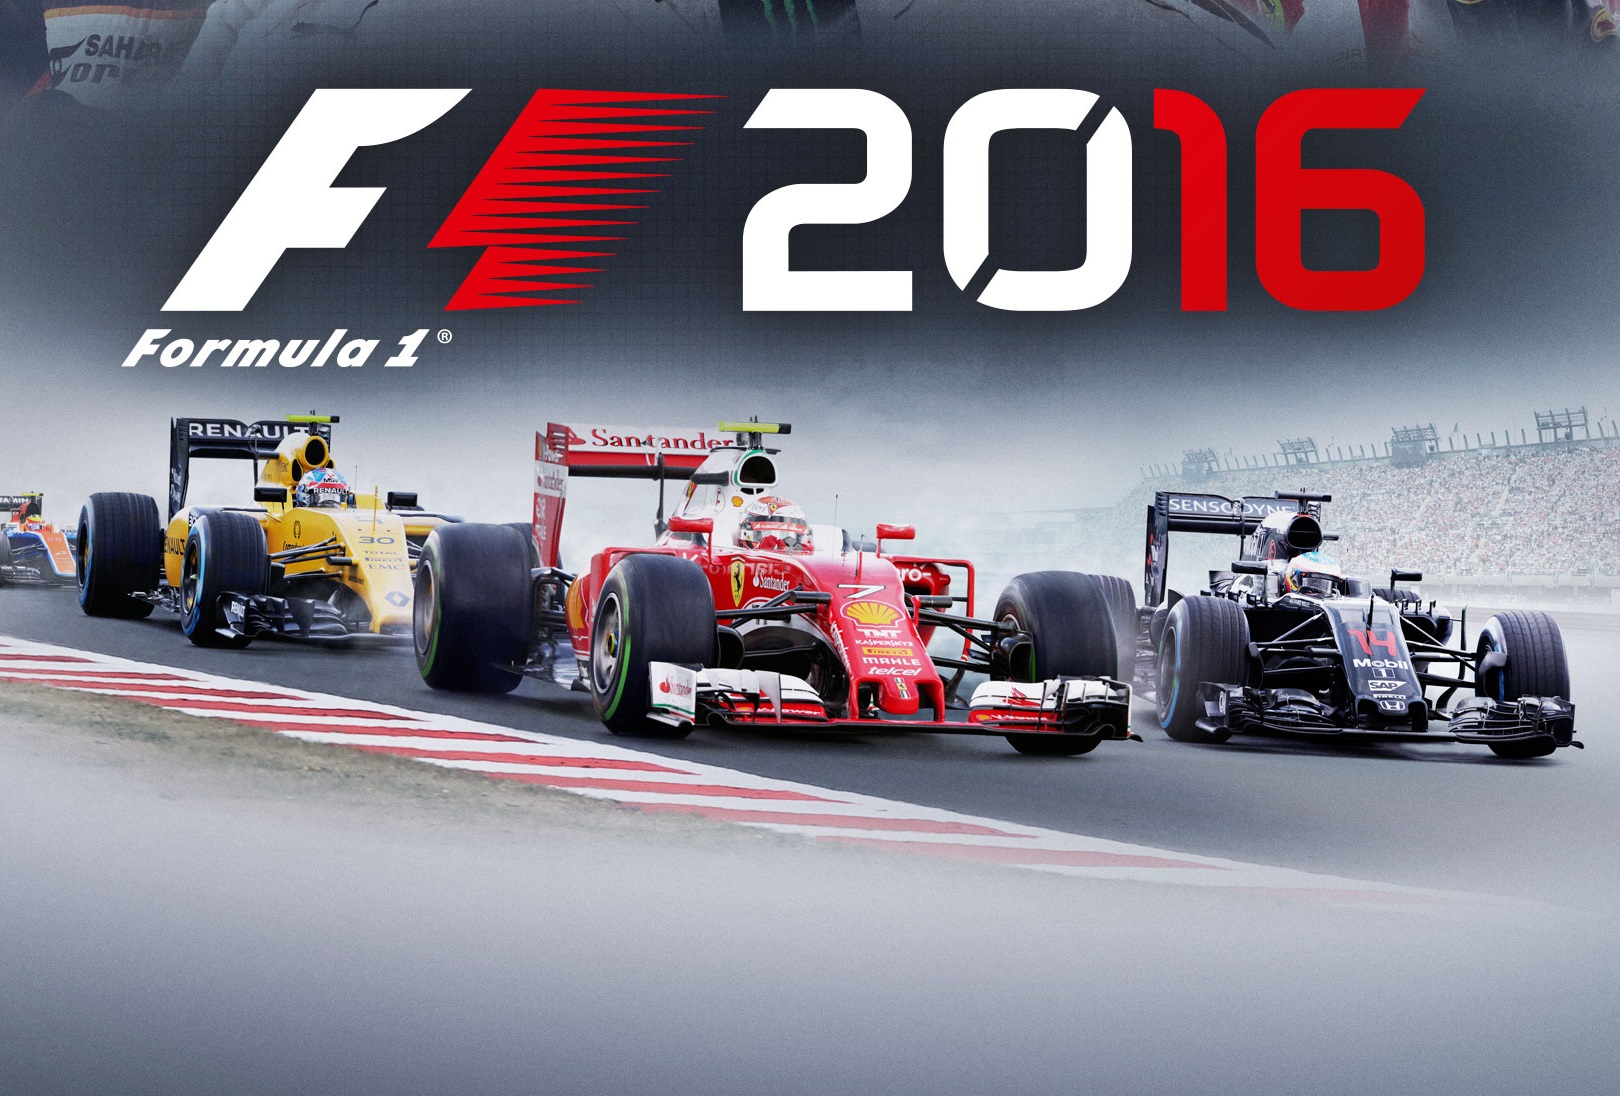 Игра 2016 2017. Формула 1 2016. F1 2016. F1 2016 игра. Формула 1 2014.